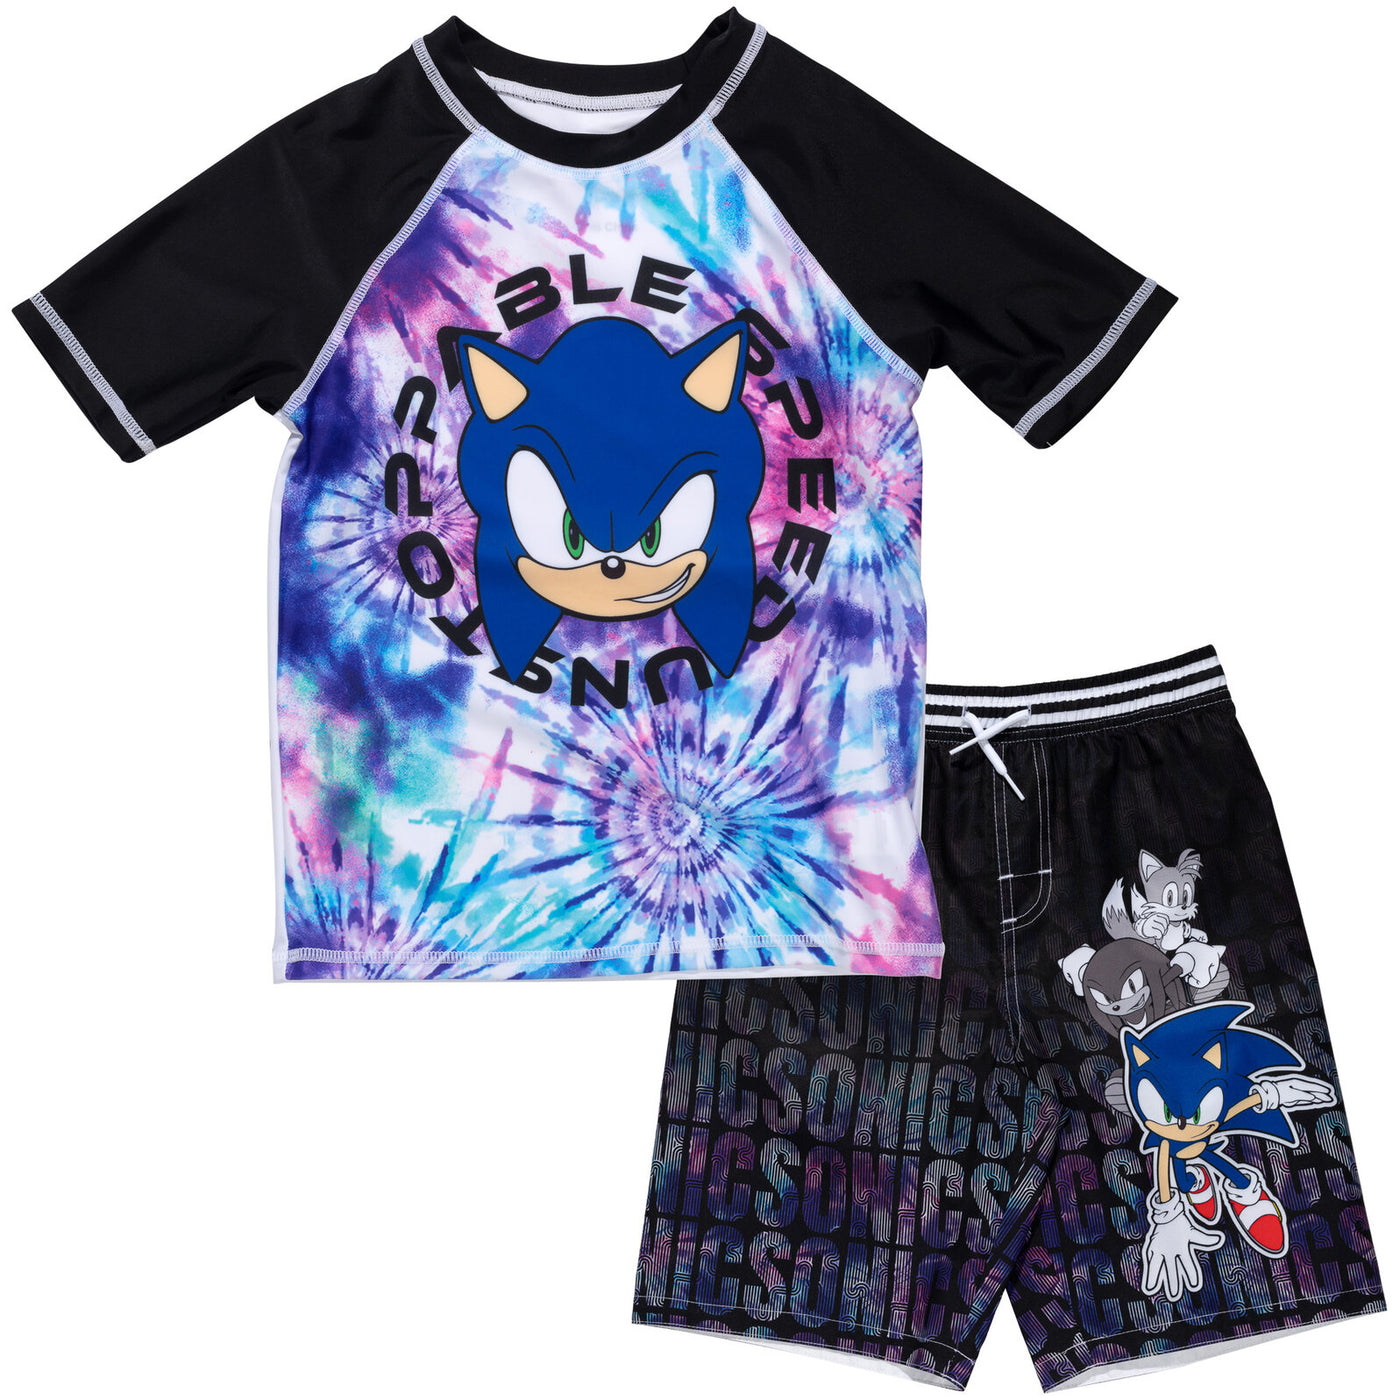 SEGA Sonic the Hedgehog Pullover Rash Guard and Swim Trunks Outfit Set